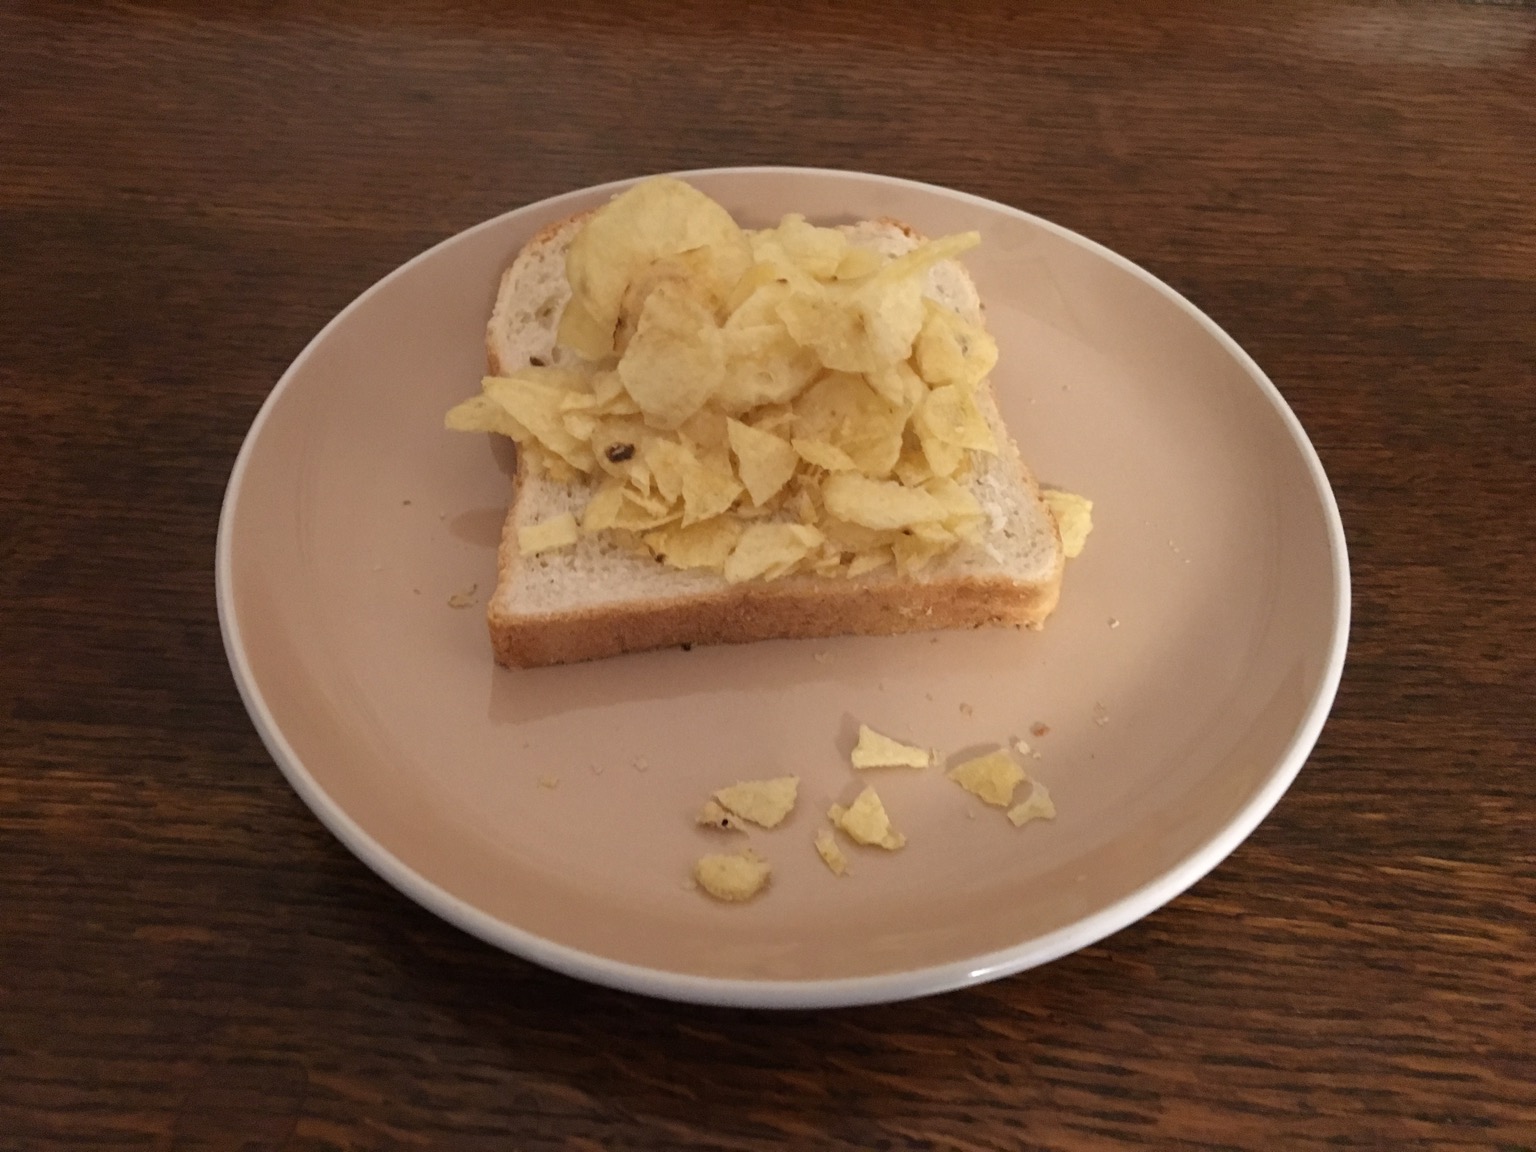 Potato crisps on a single slice of white bread